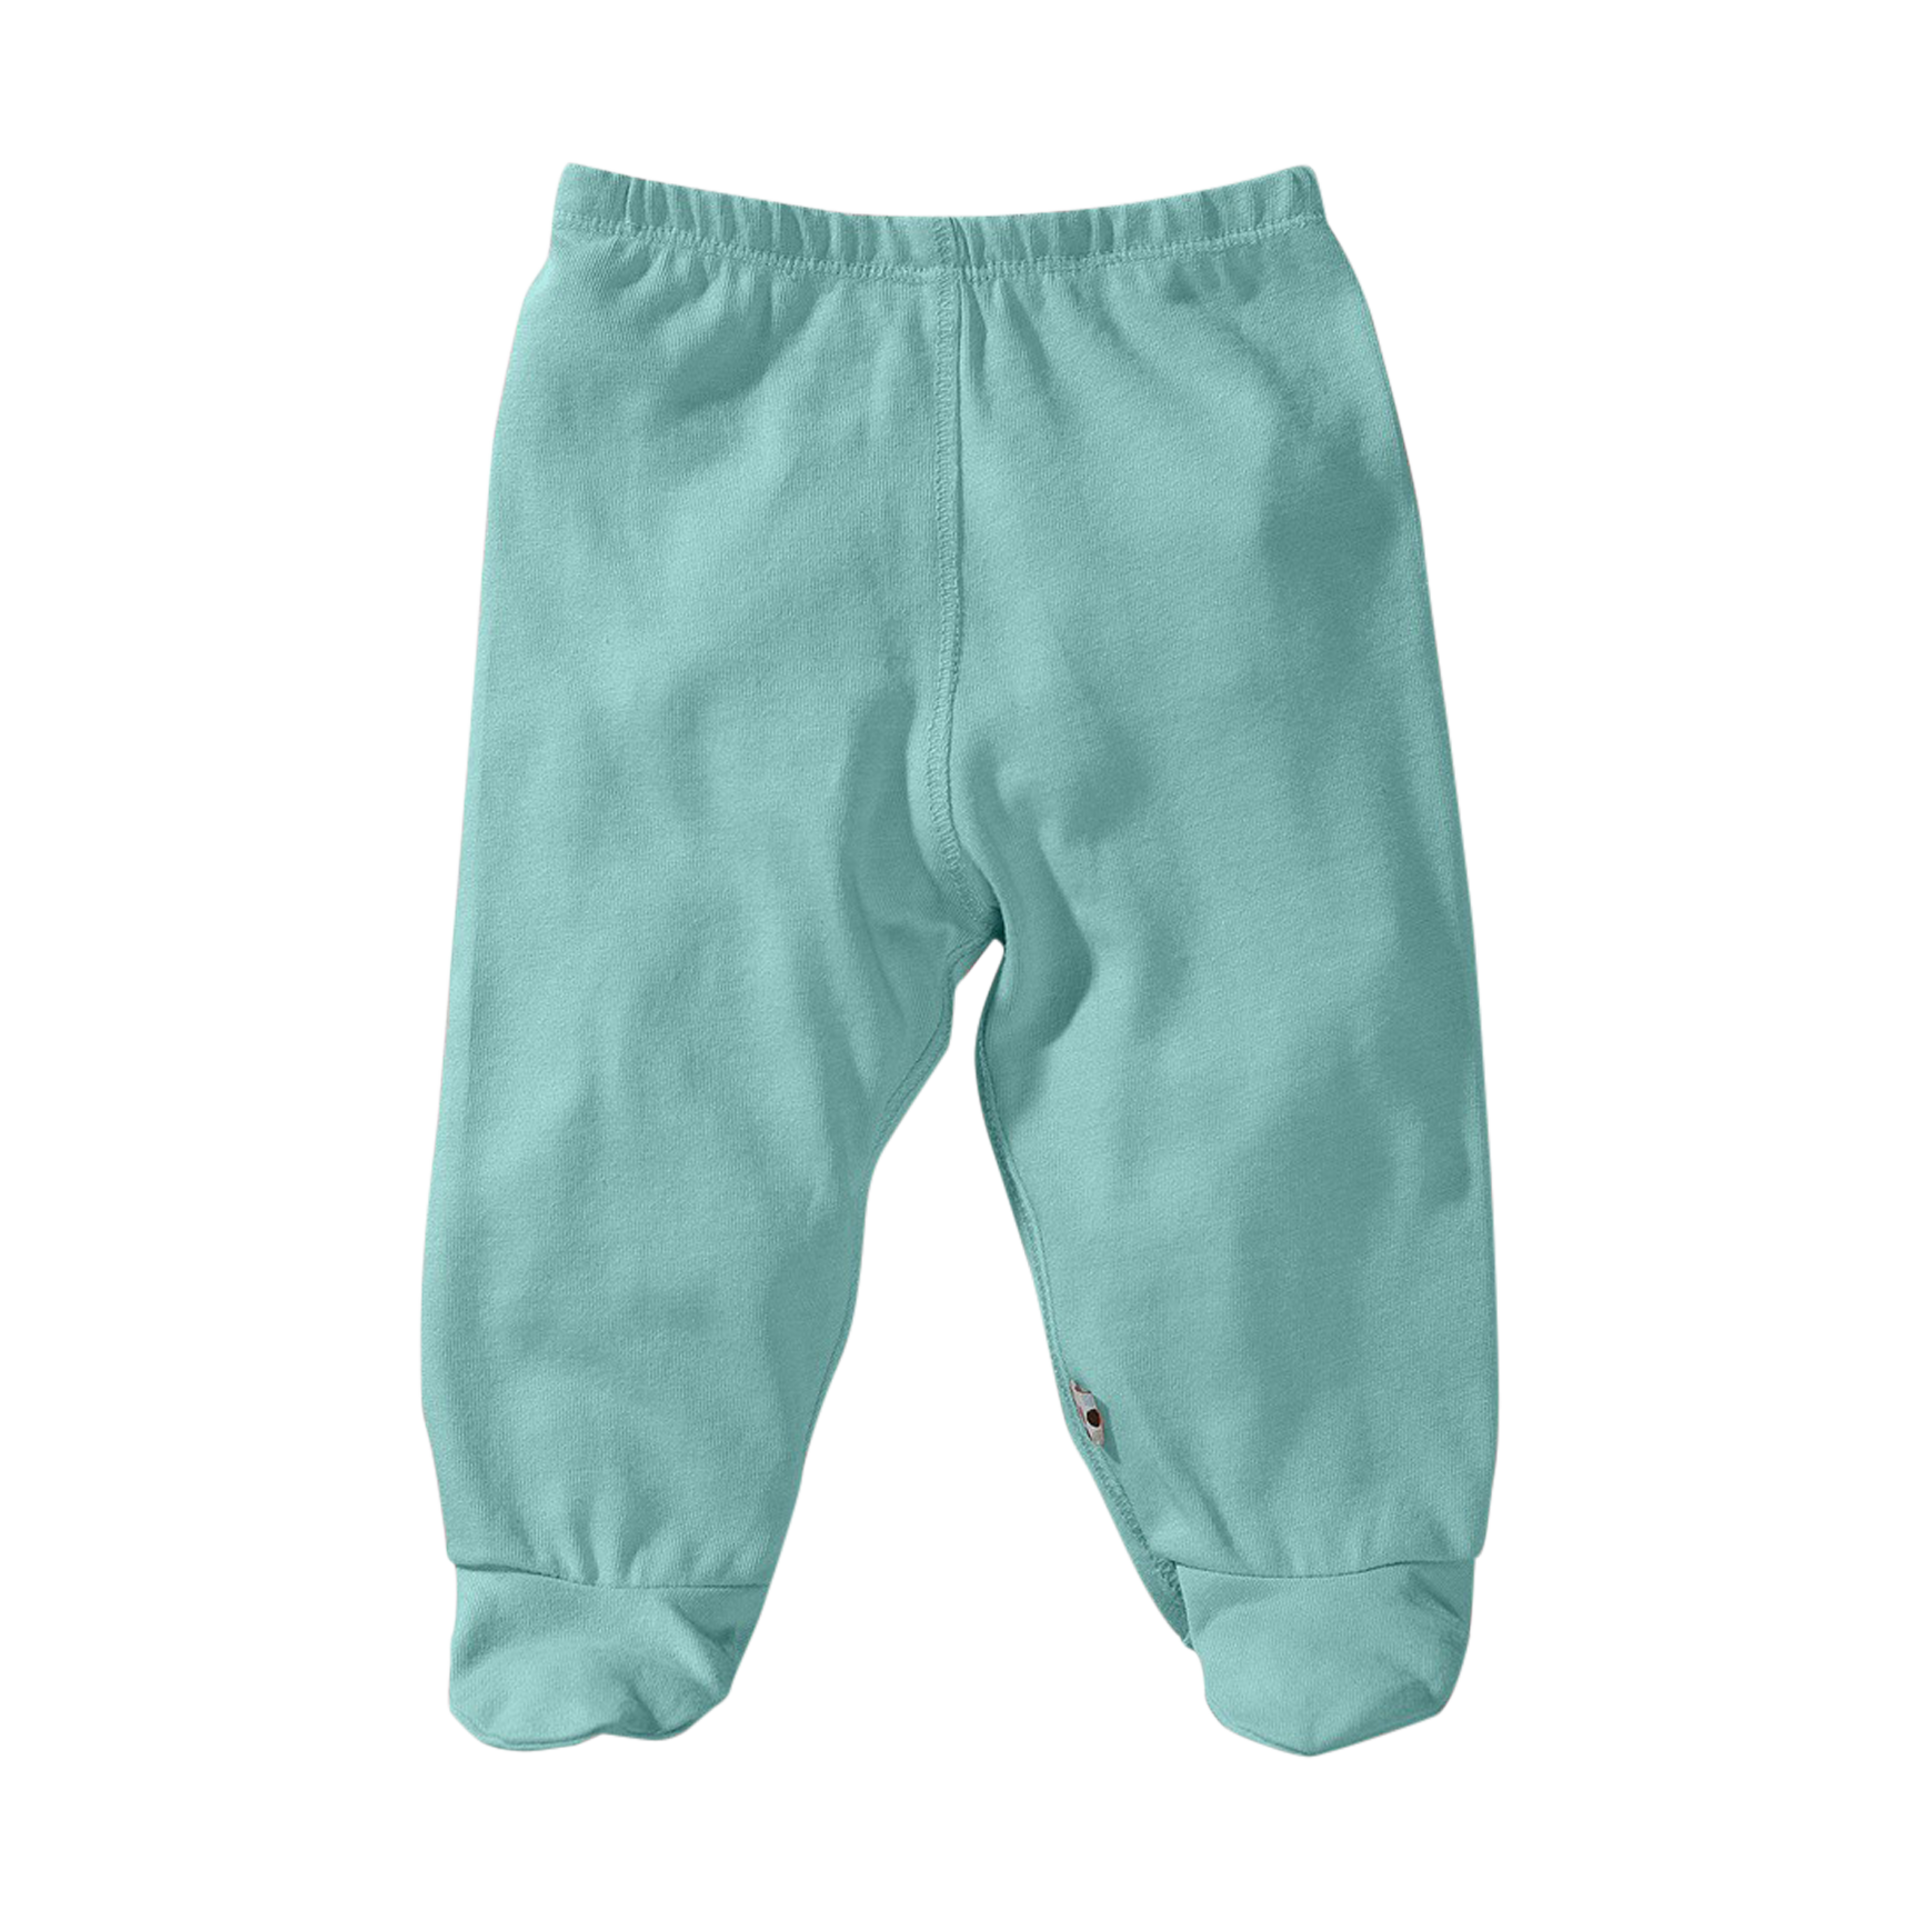 Babysoy Comfy Basic Footie Pants Unisex 2 Packs